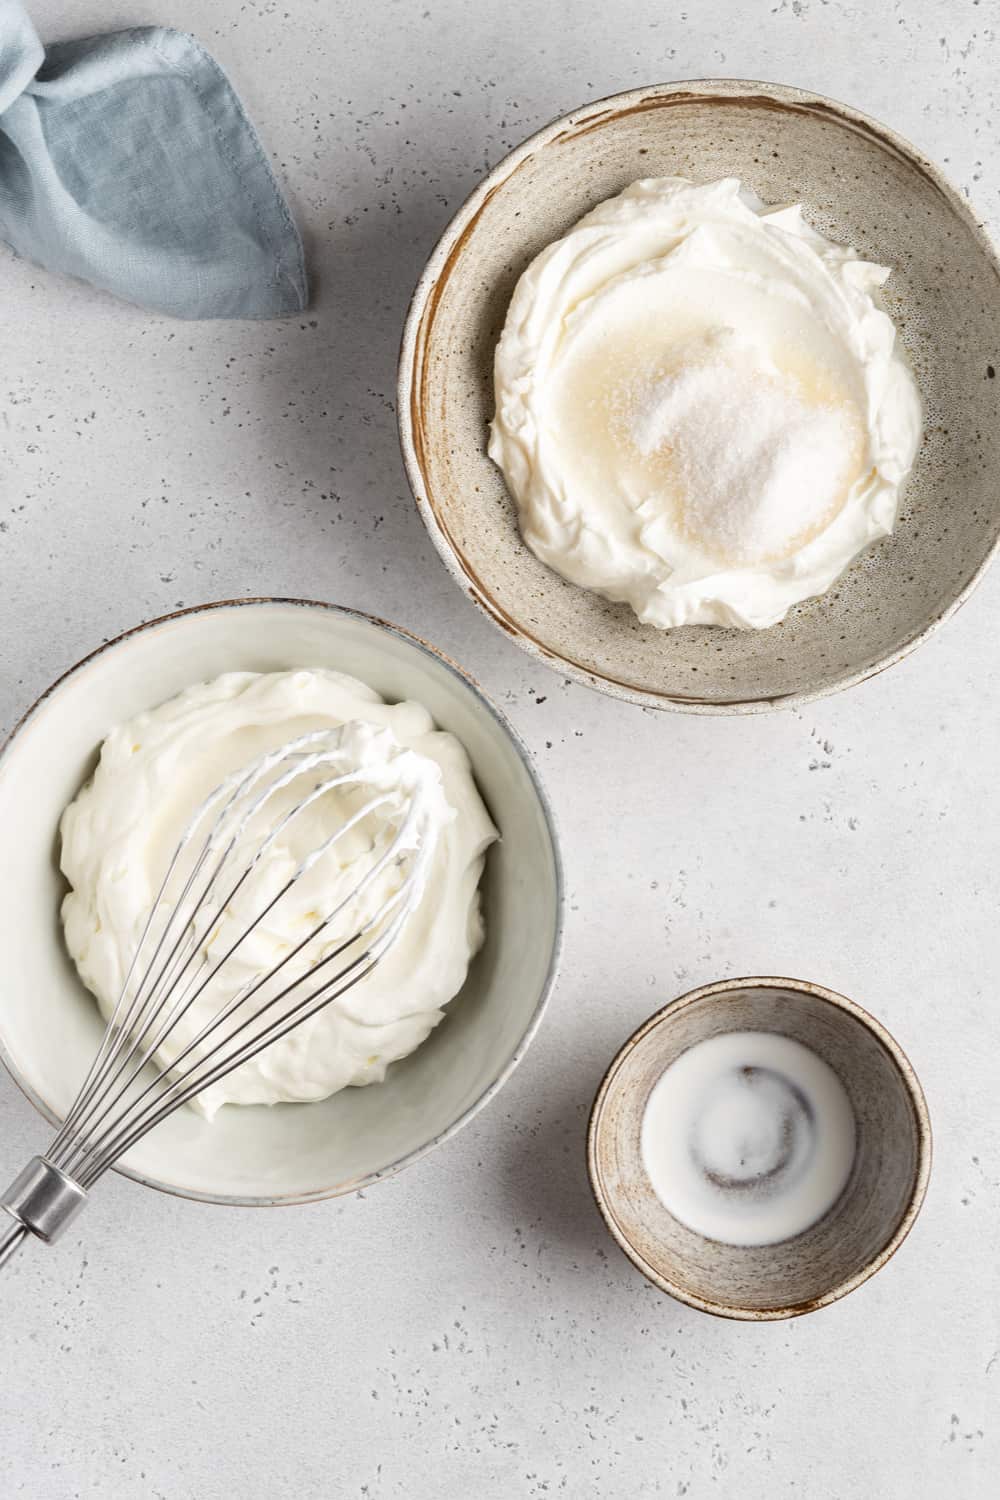 Phân biệt Whipping cream với Heavy cream, Topping cream?